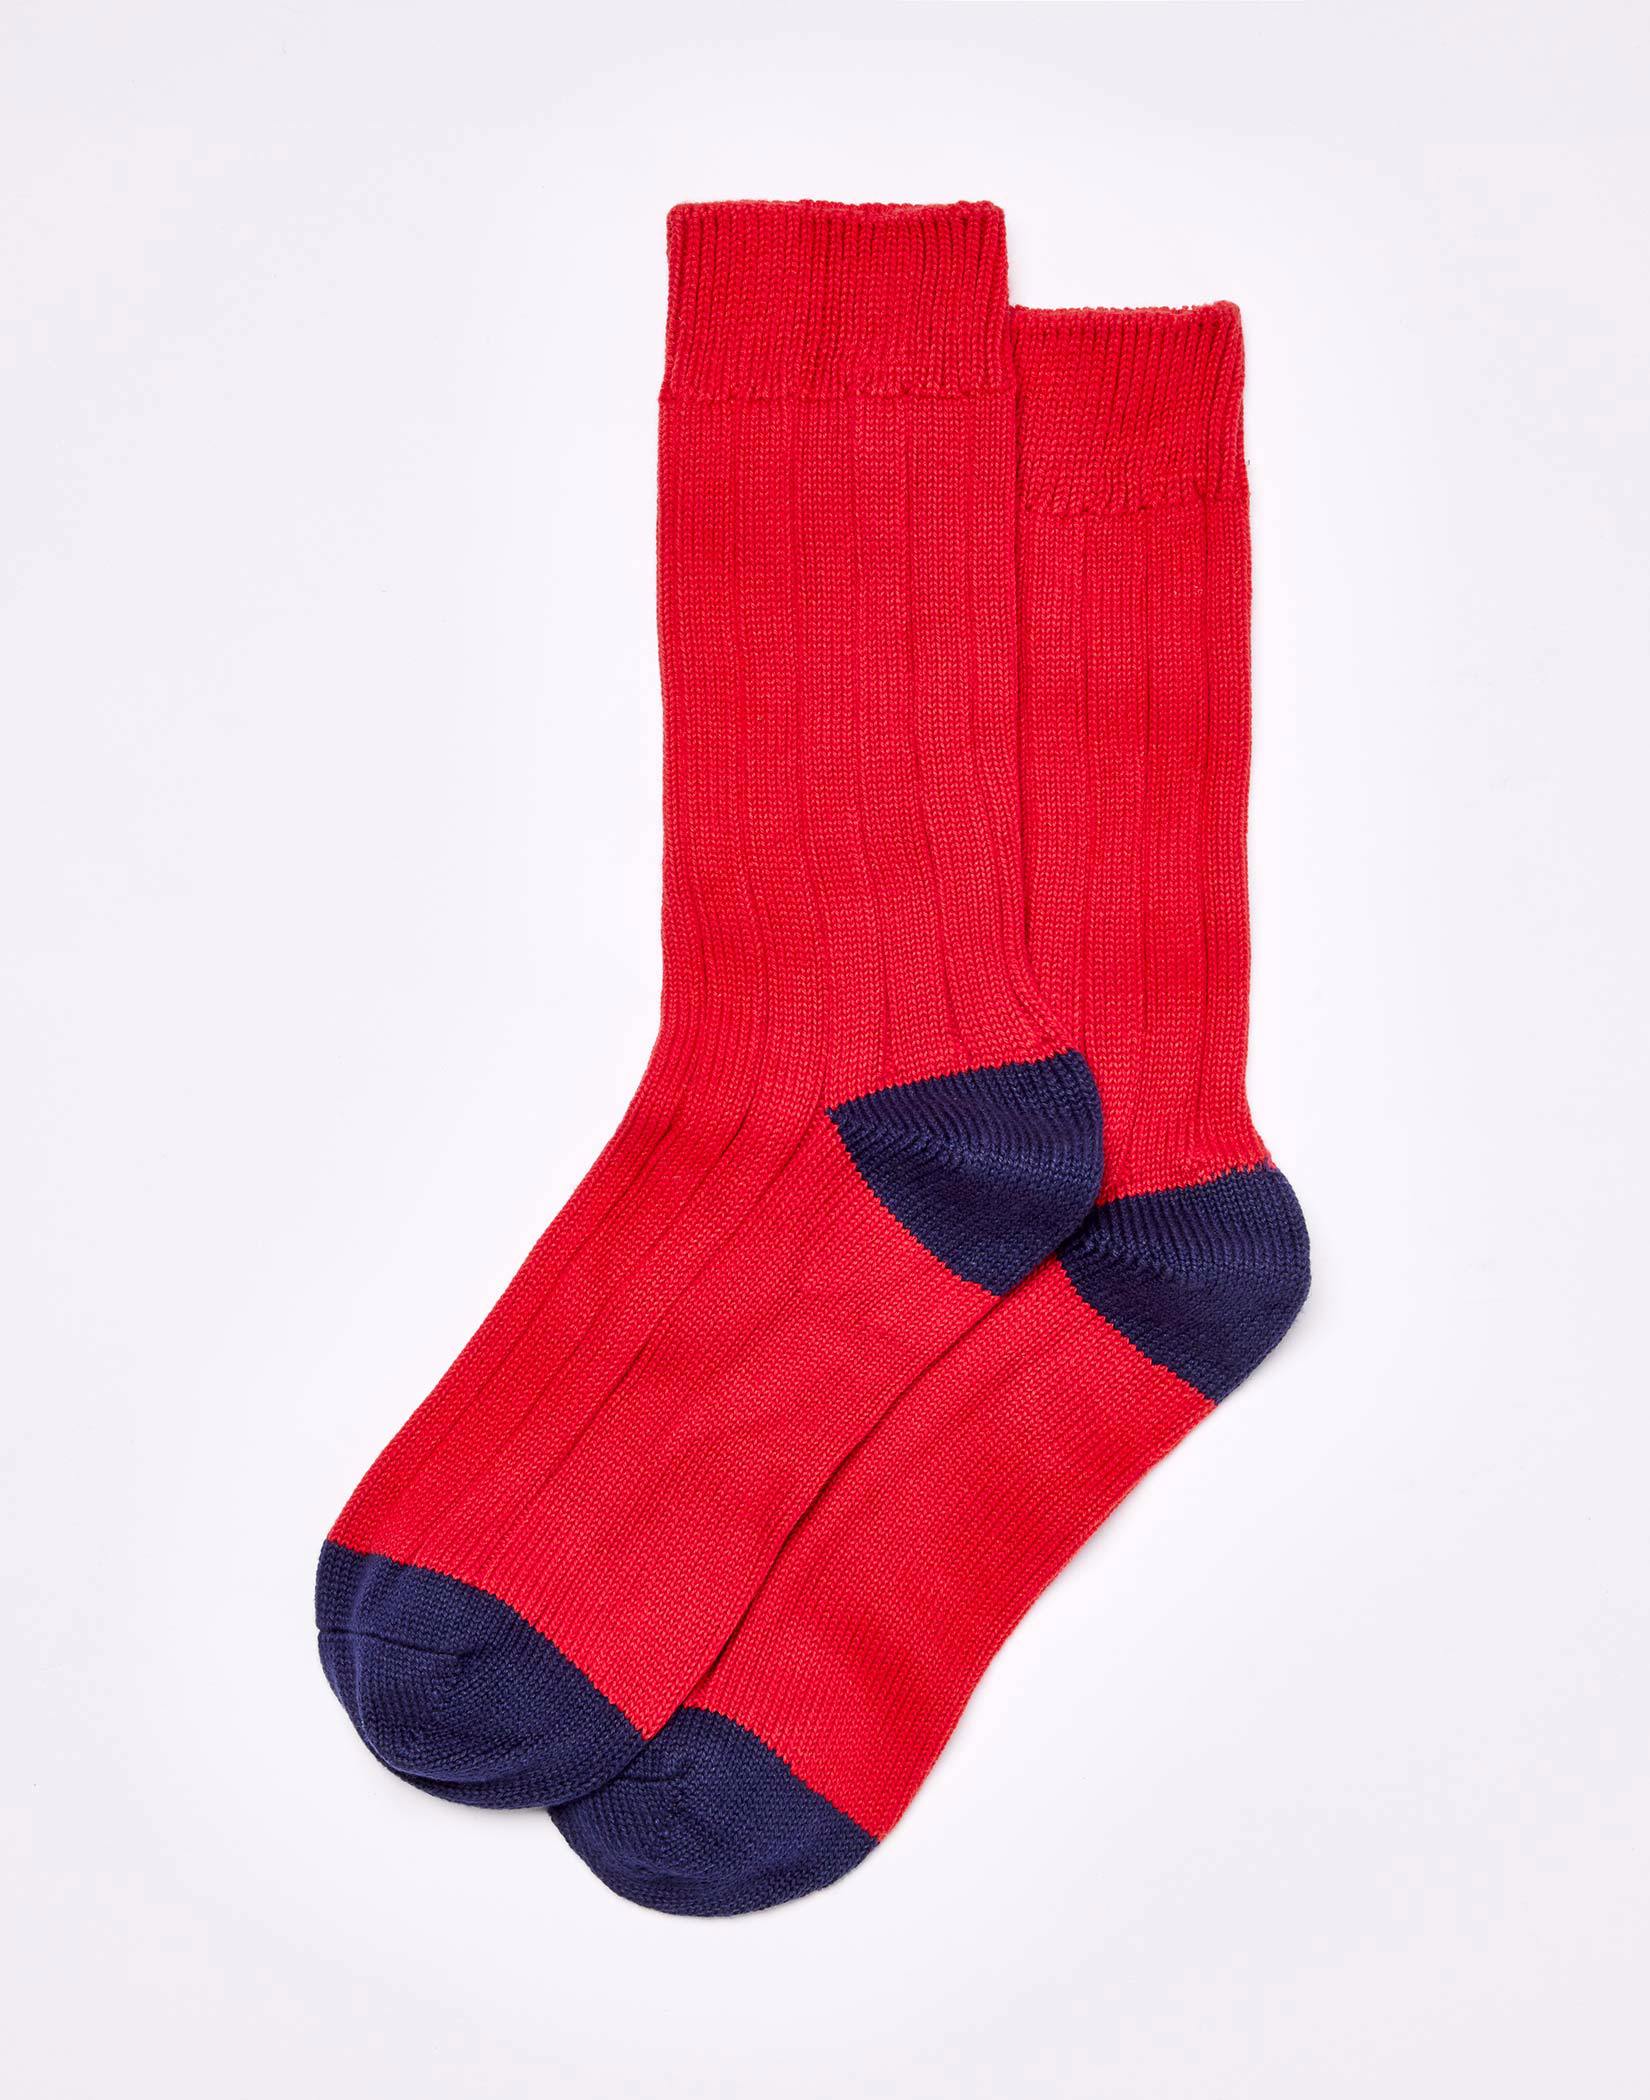 Heel & Toe Cotton Socks - Red/Navy